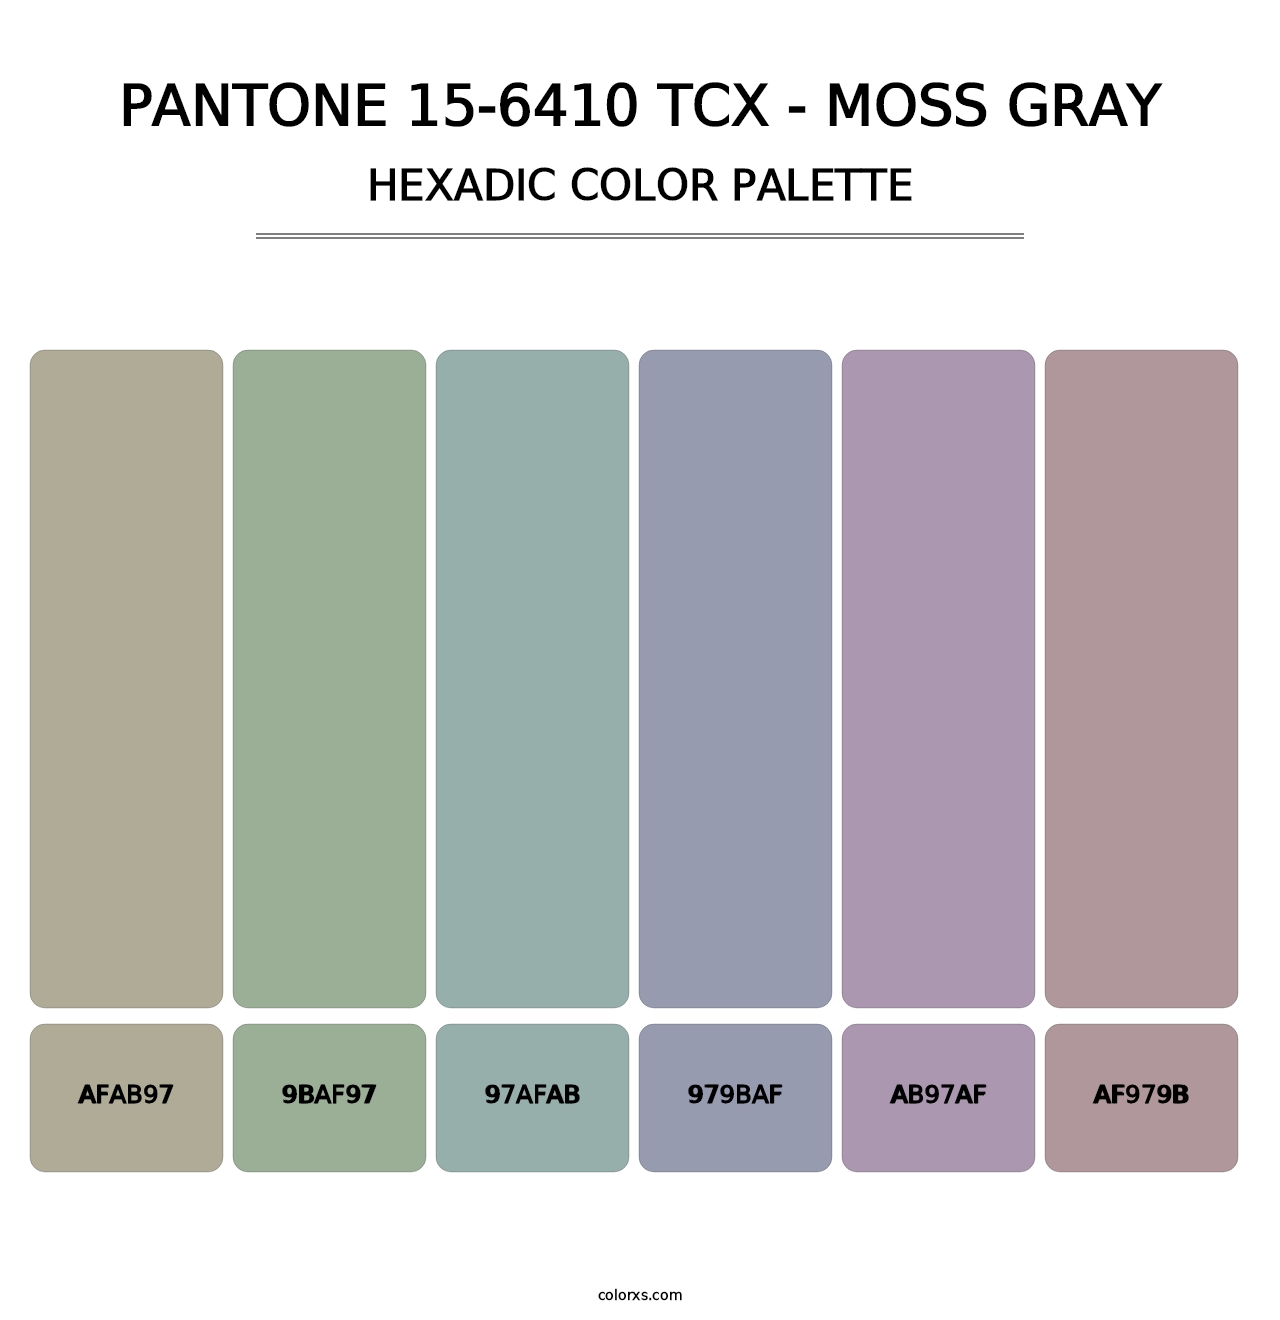 PANTONE 15-6410 TCX - Moss Gray - Hexadic Color Palette